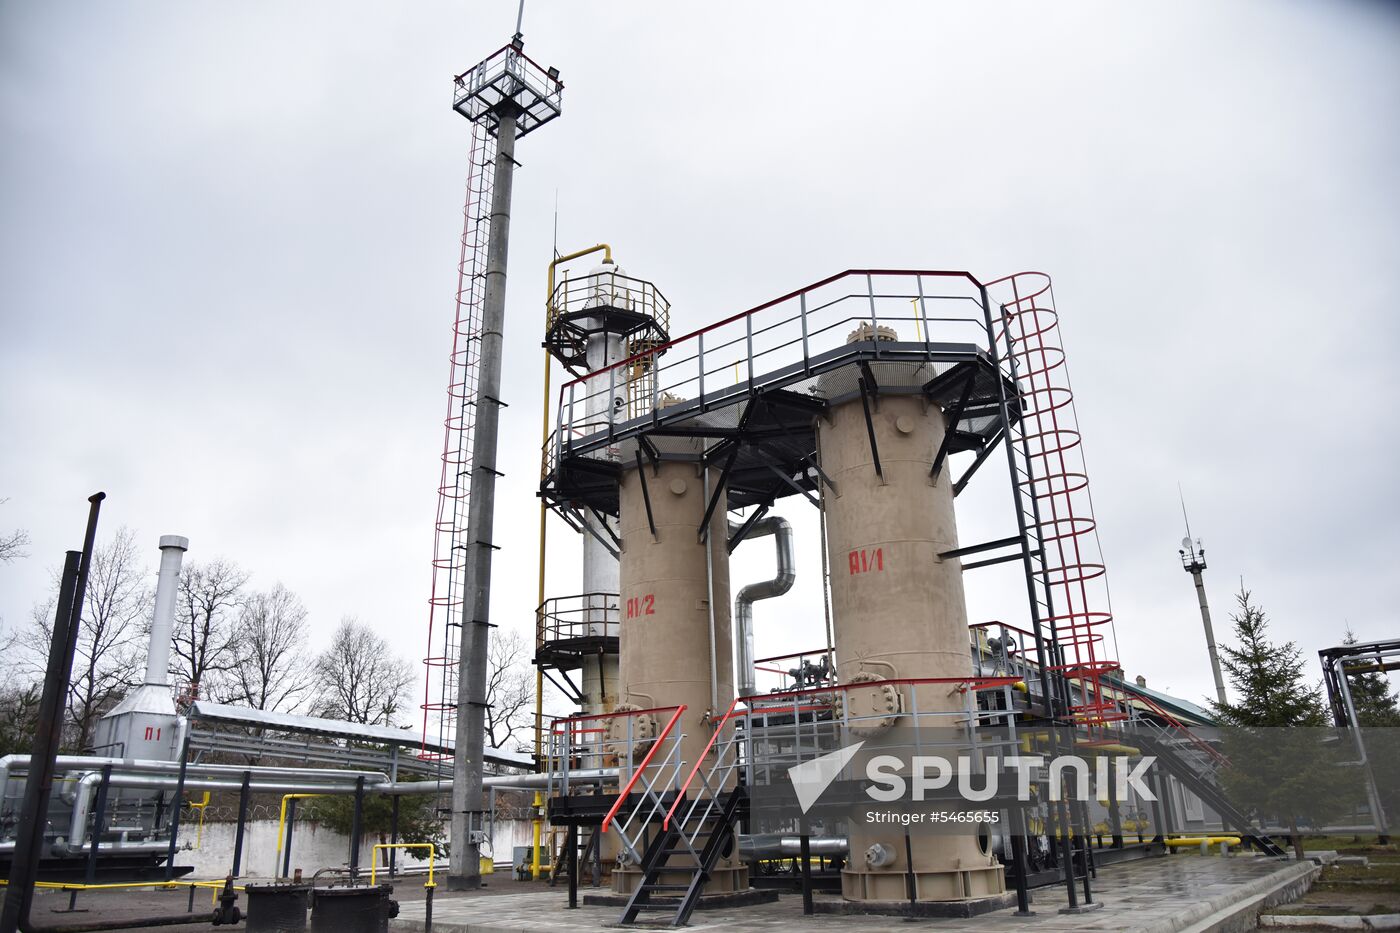 Ukrgazdobycha gas producing facility in Lviv Region